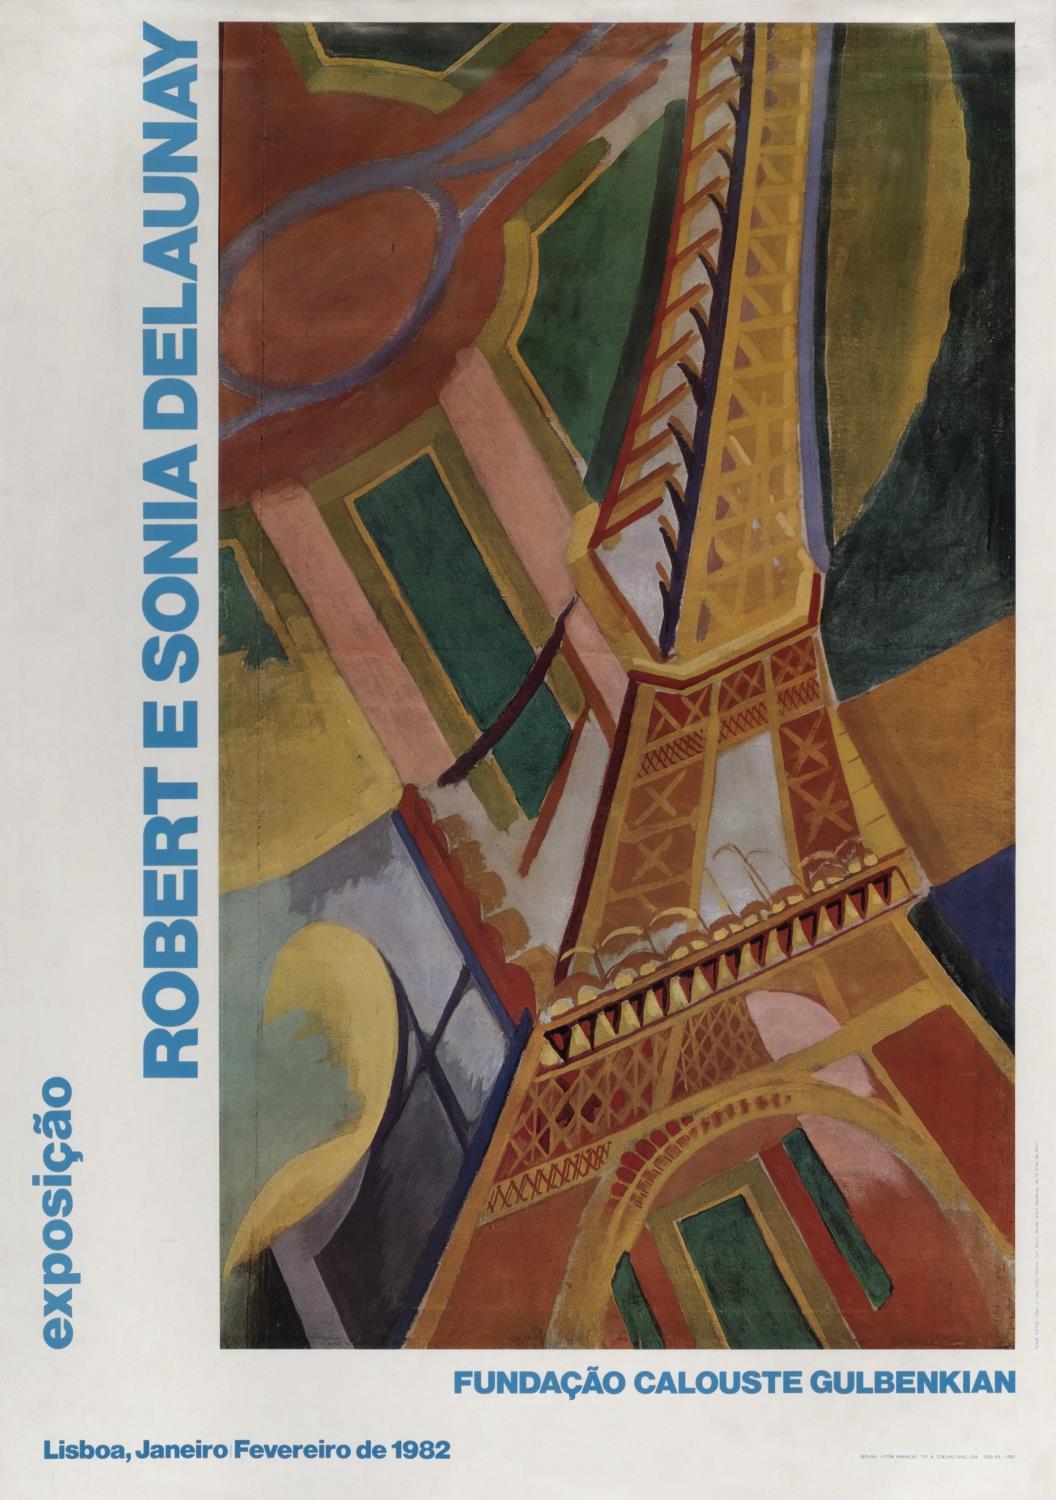 Robert e Sonia Delaunay (1885 – 1941, 1885 – 1979)